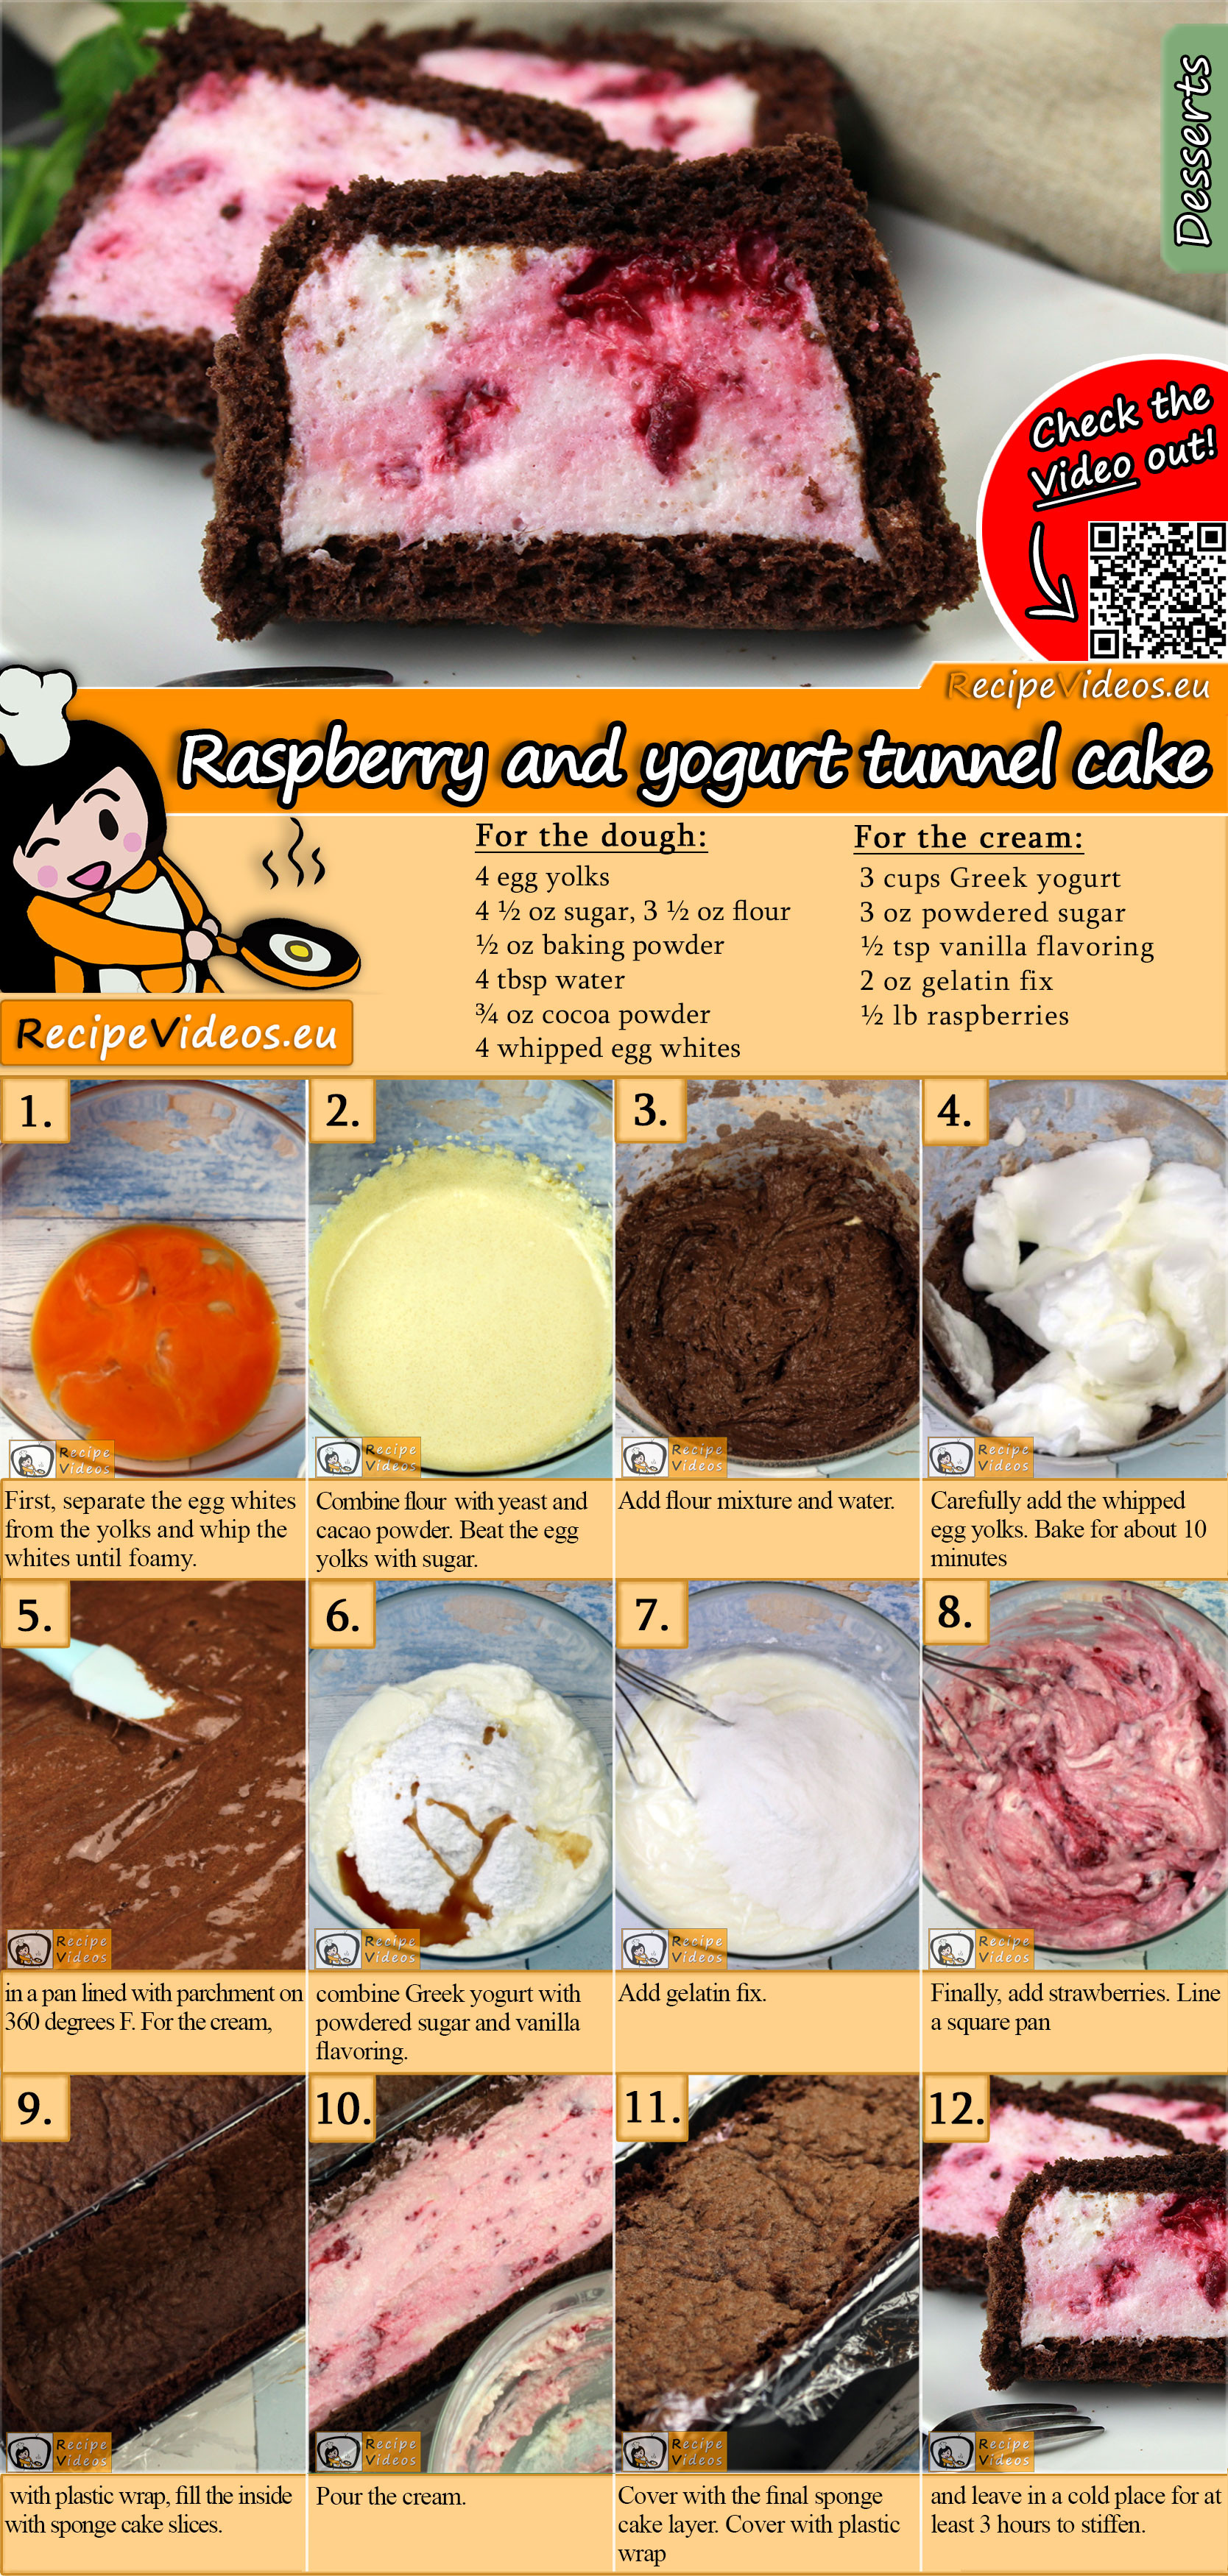 Raspberry and yogurt tunnel cake recipe with video